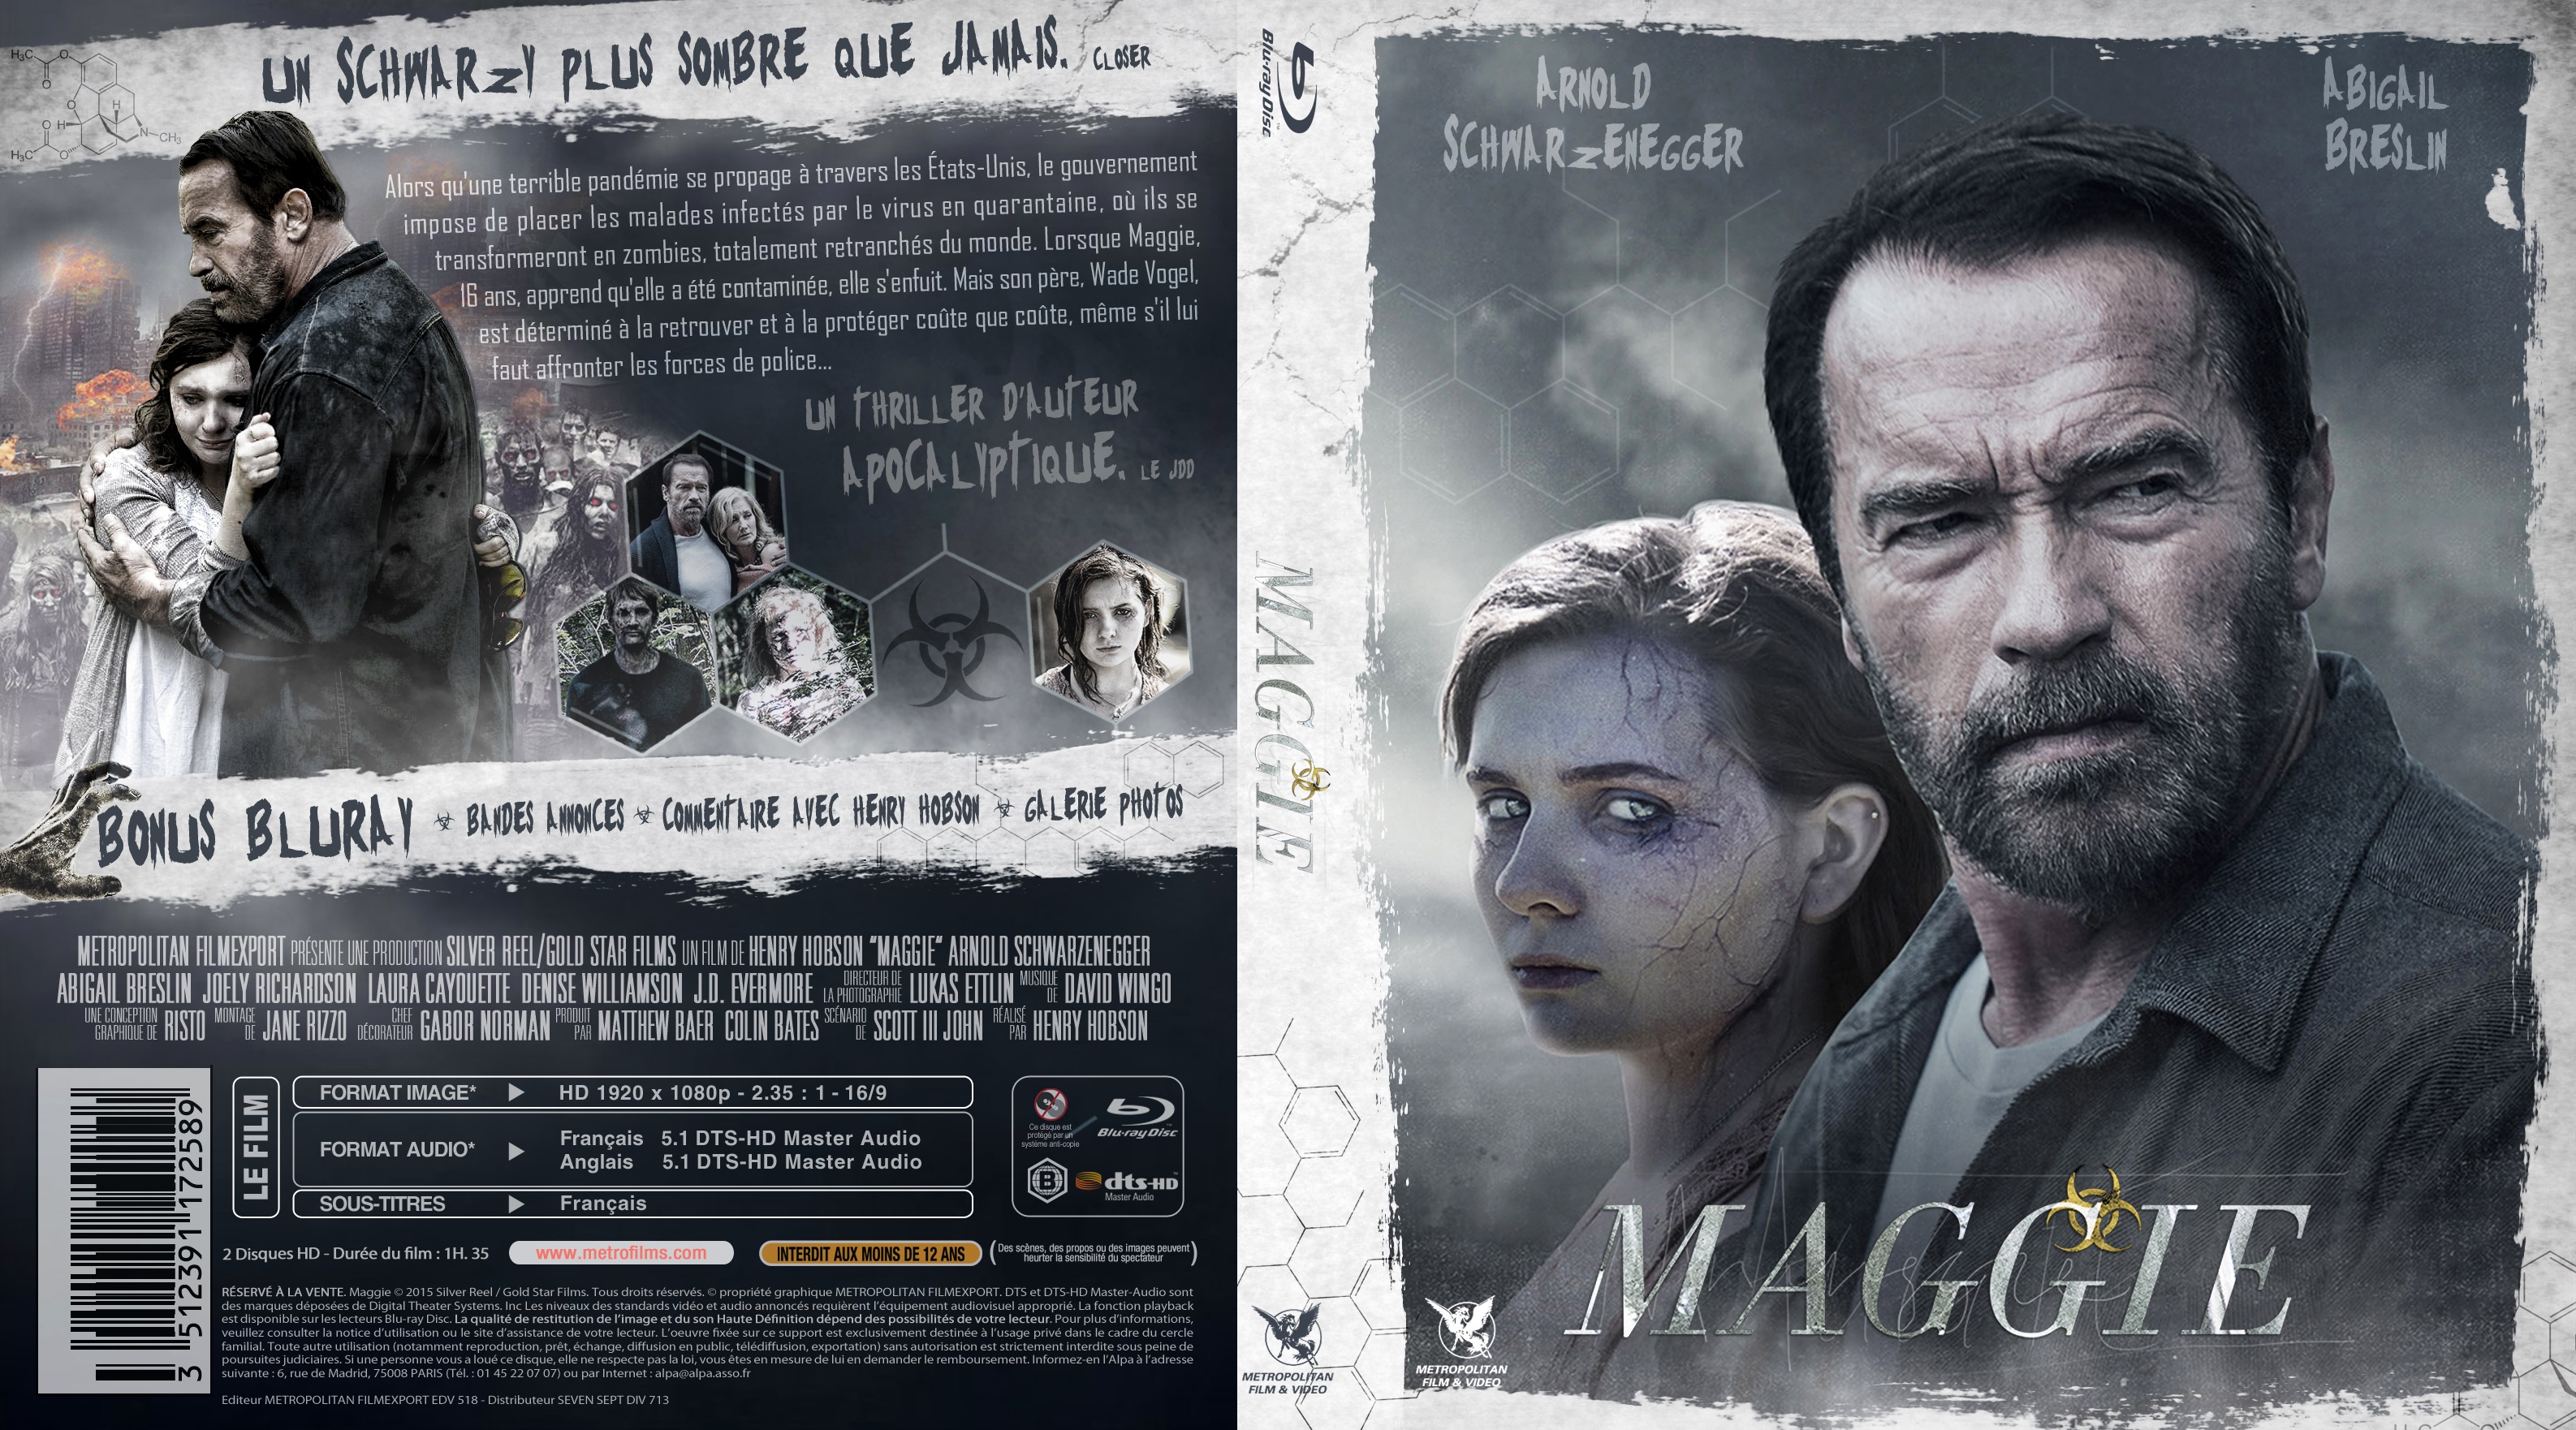 Jaquette DVD Maggie custom (BLU-RAY) v2